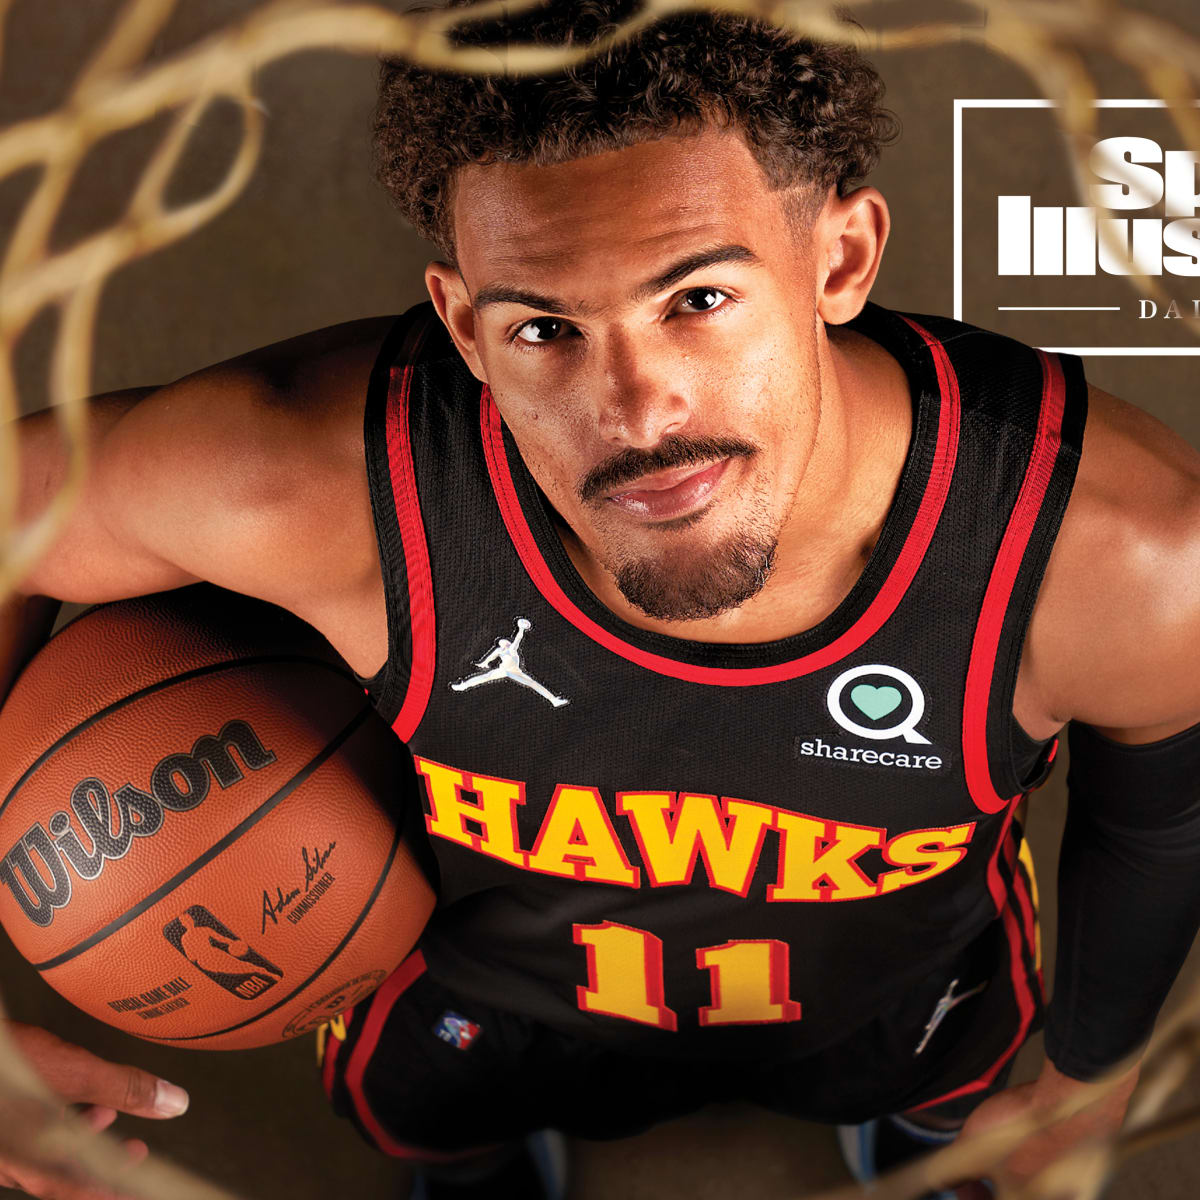 Trae Young Atlanta Hawks Jerseys Sales Increasing - Sports Illustrated  Atlanta Hawks News, Analysis and More